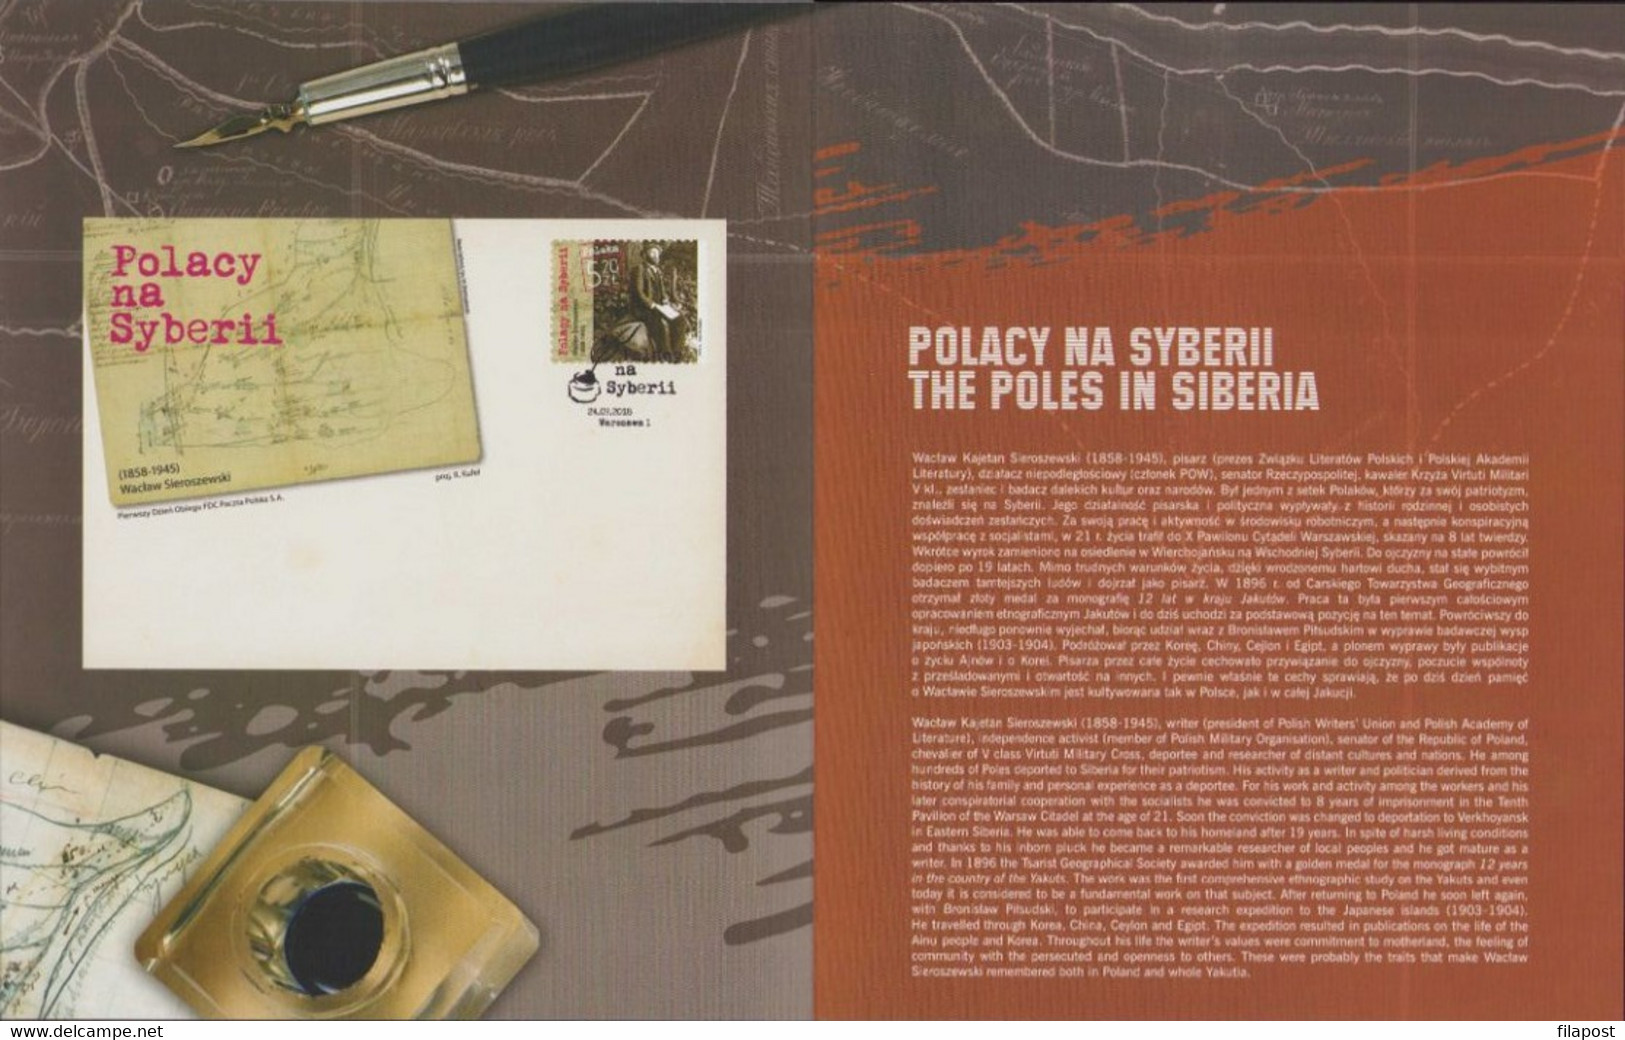 POLAND 2018 Booklet / Mi 5015 / The Poles In Siberia, Waclaw Sieroszewski / Stamp MNH** FV - Booklets